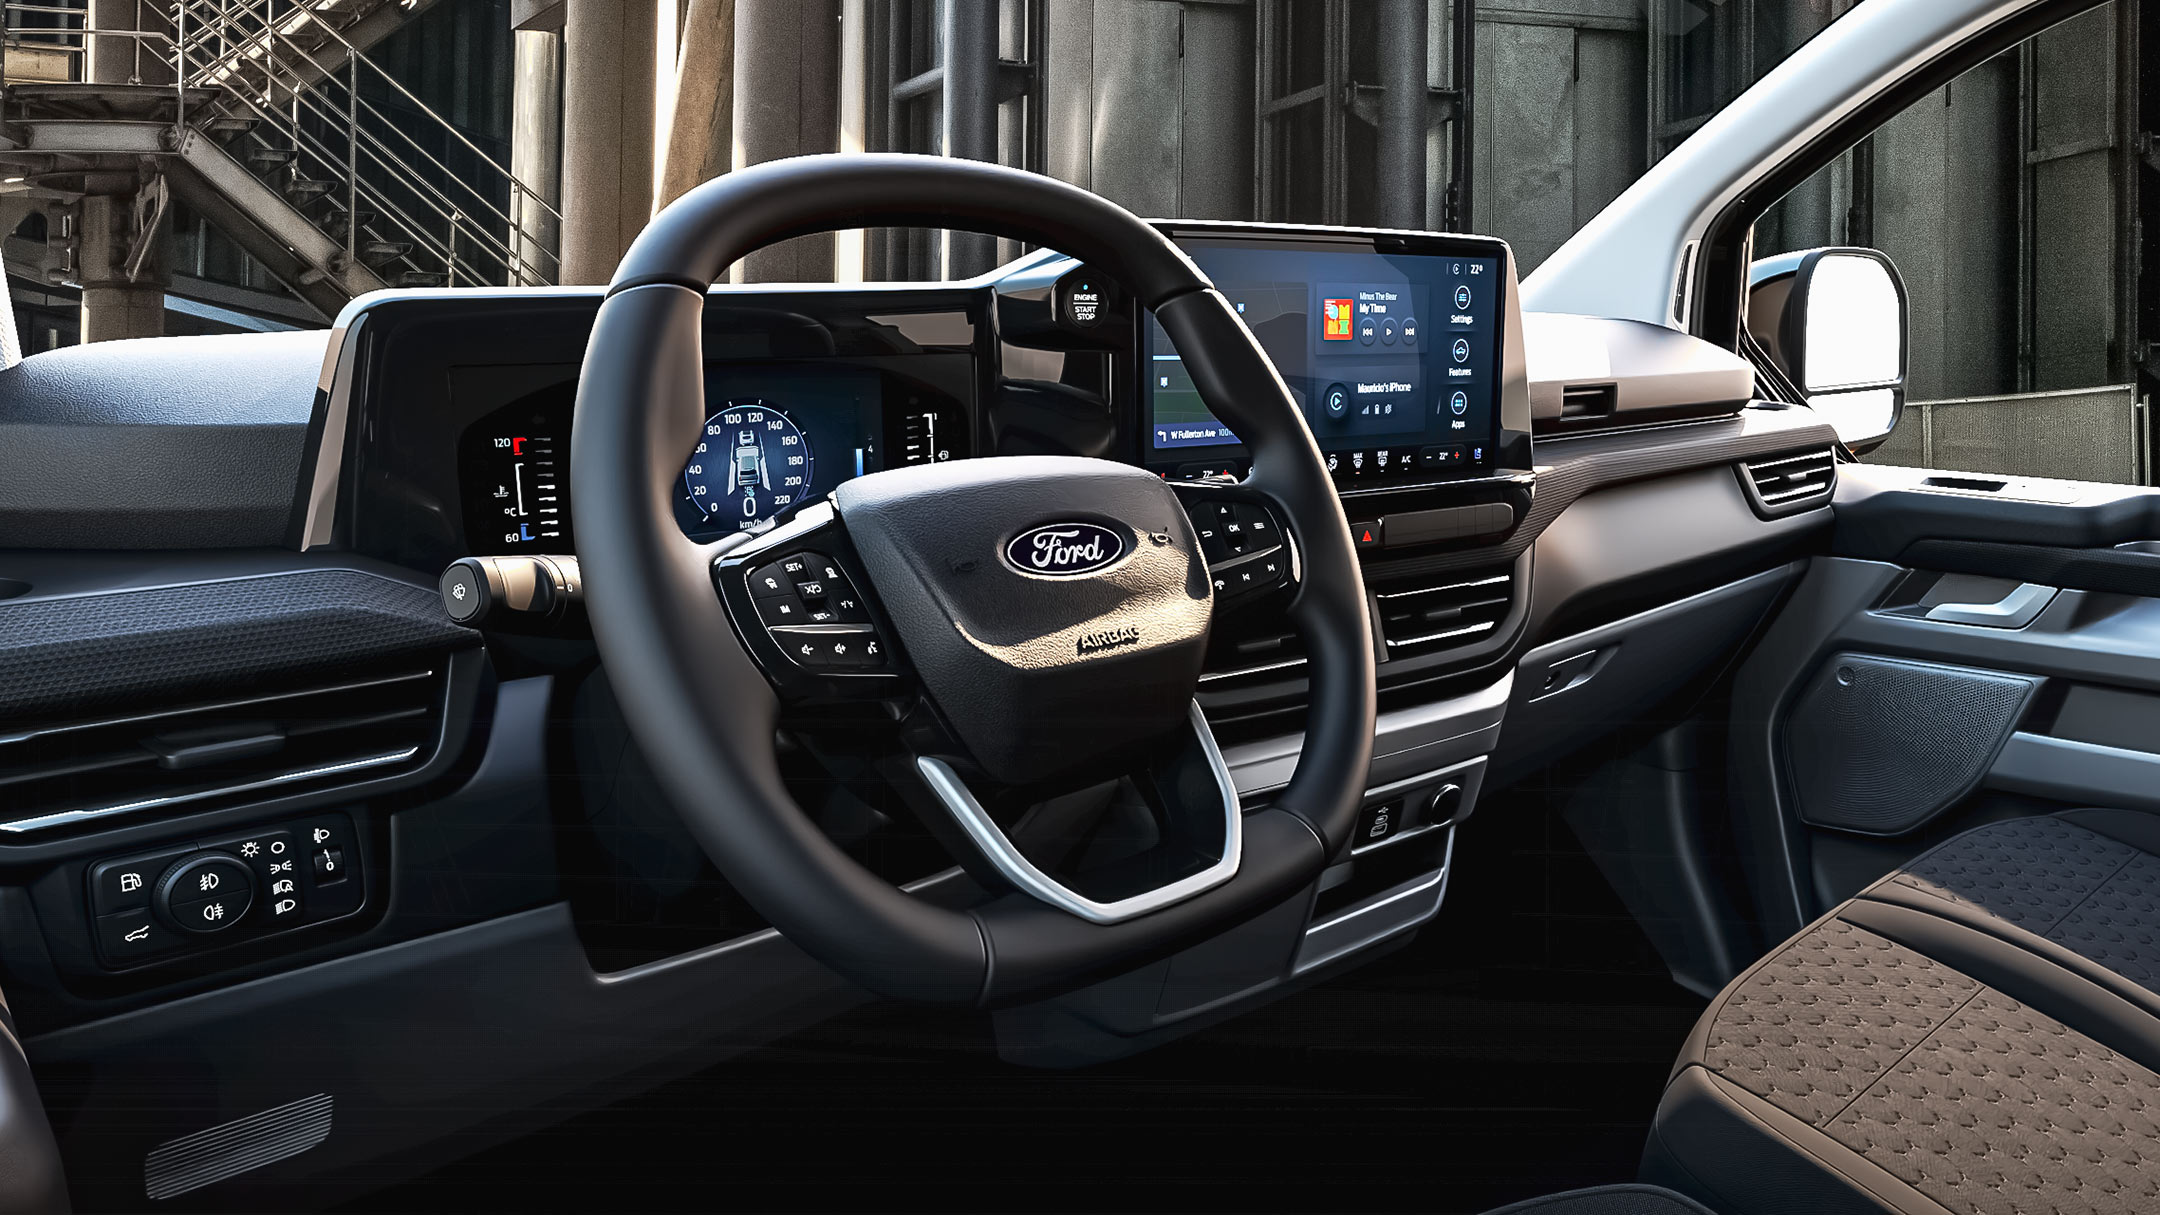 Ford E-Transit Custom interior view of dashboard